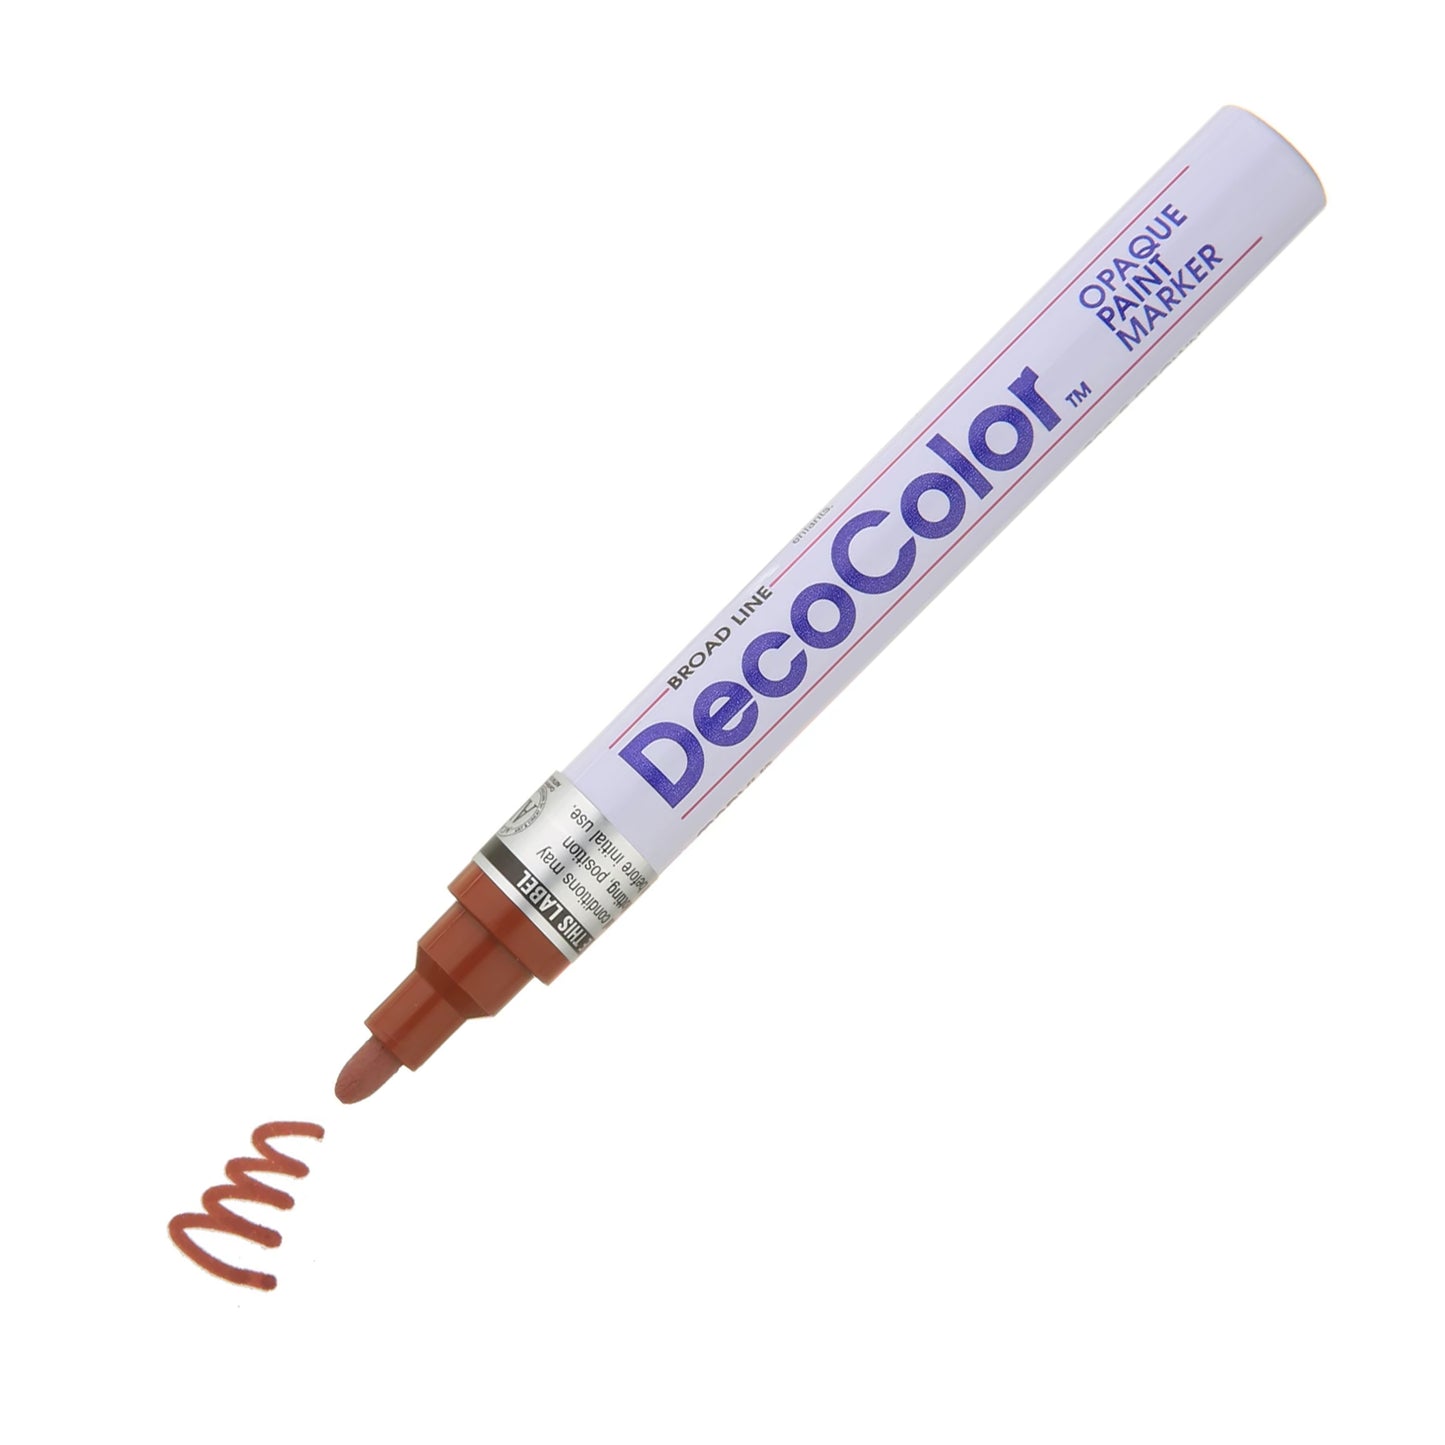 Decocolor Farbmarker, 6 mm breite Rundspitze